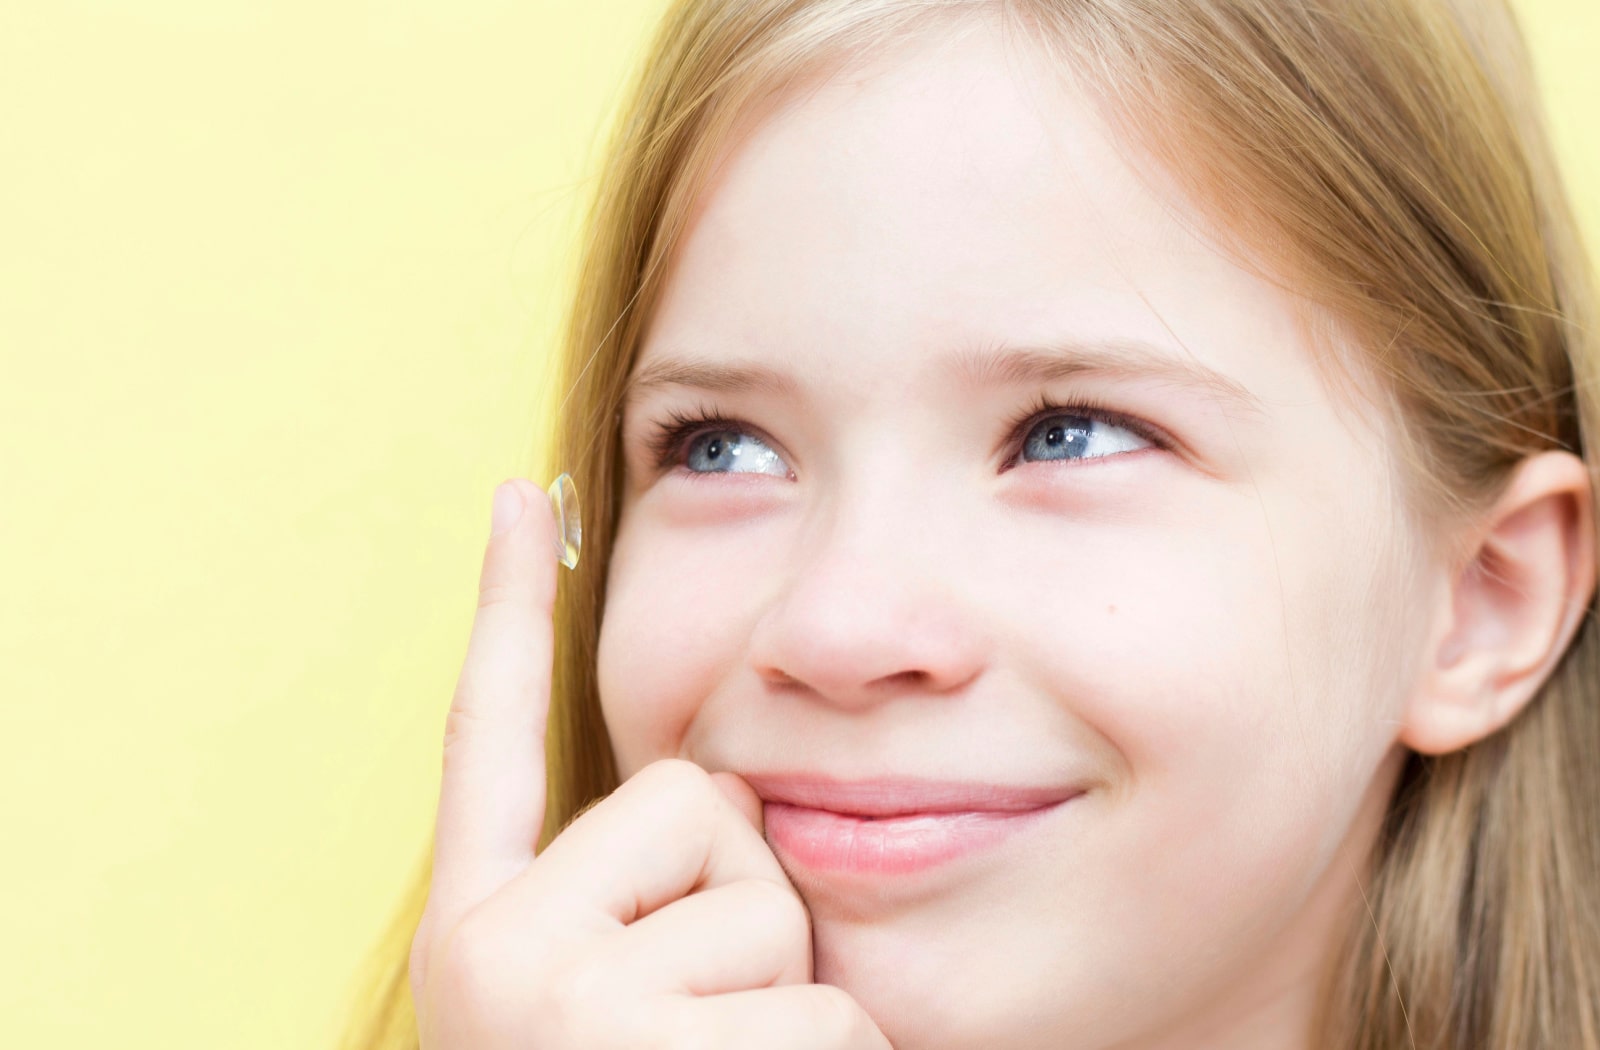 A young girl placing myopia control contact lenses into her eyes